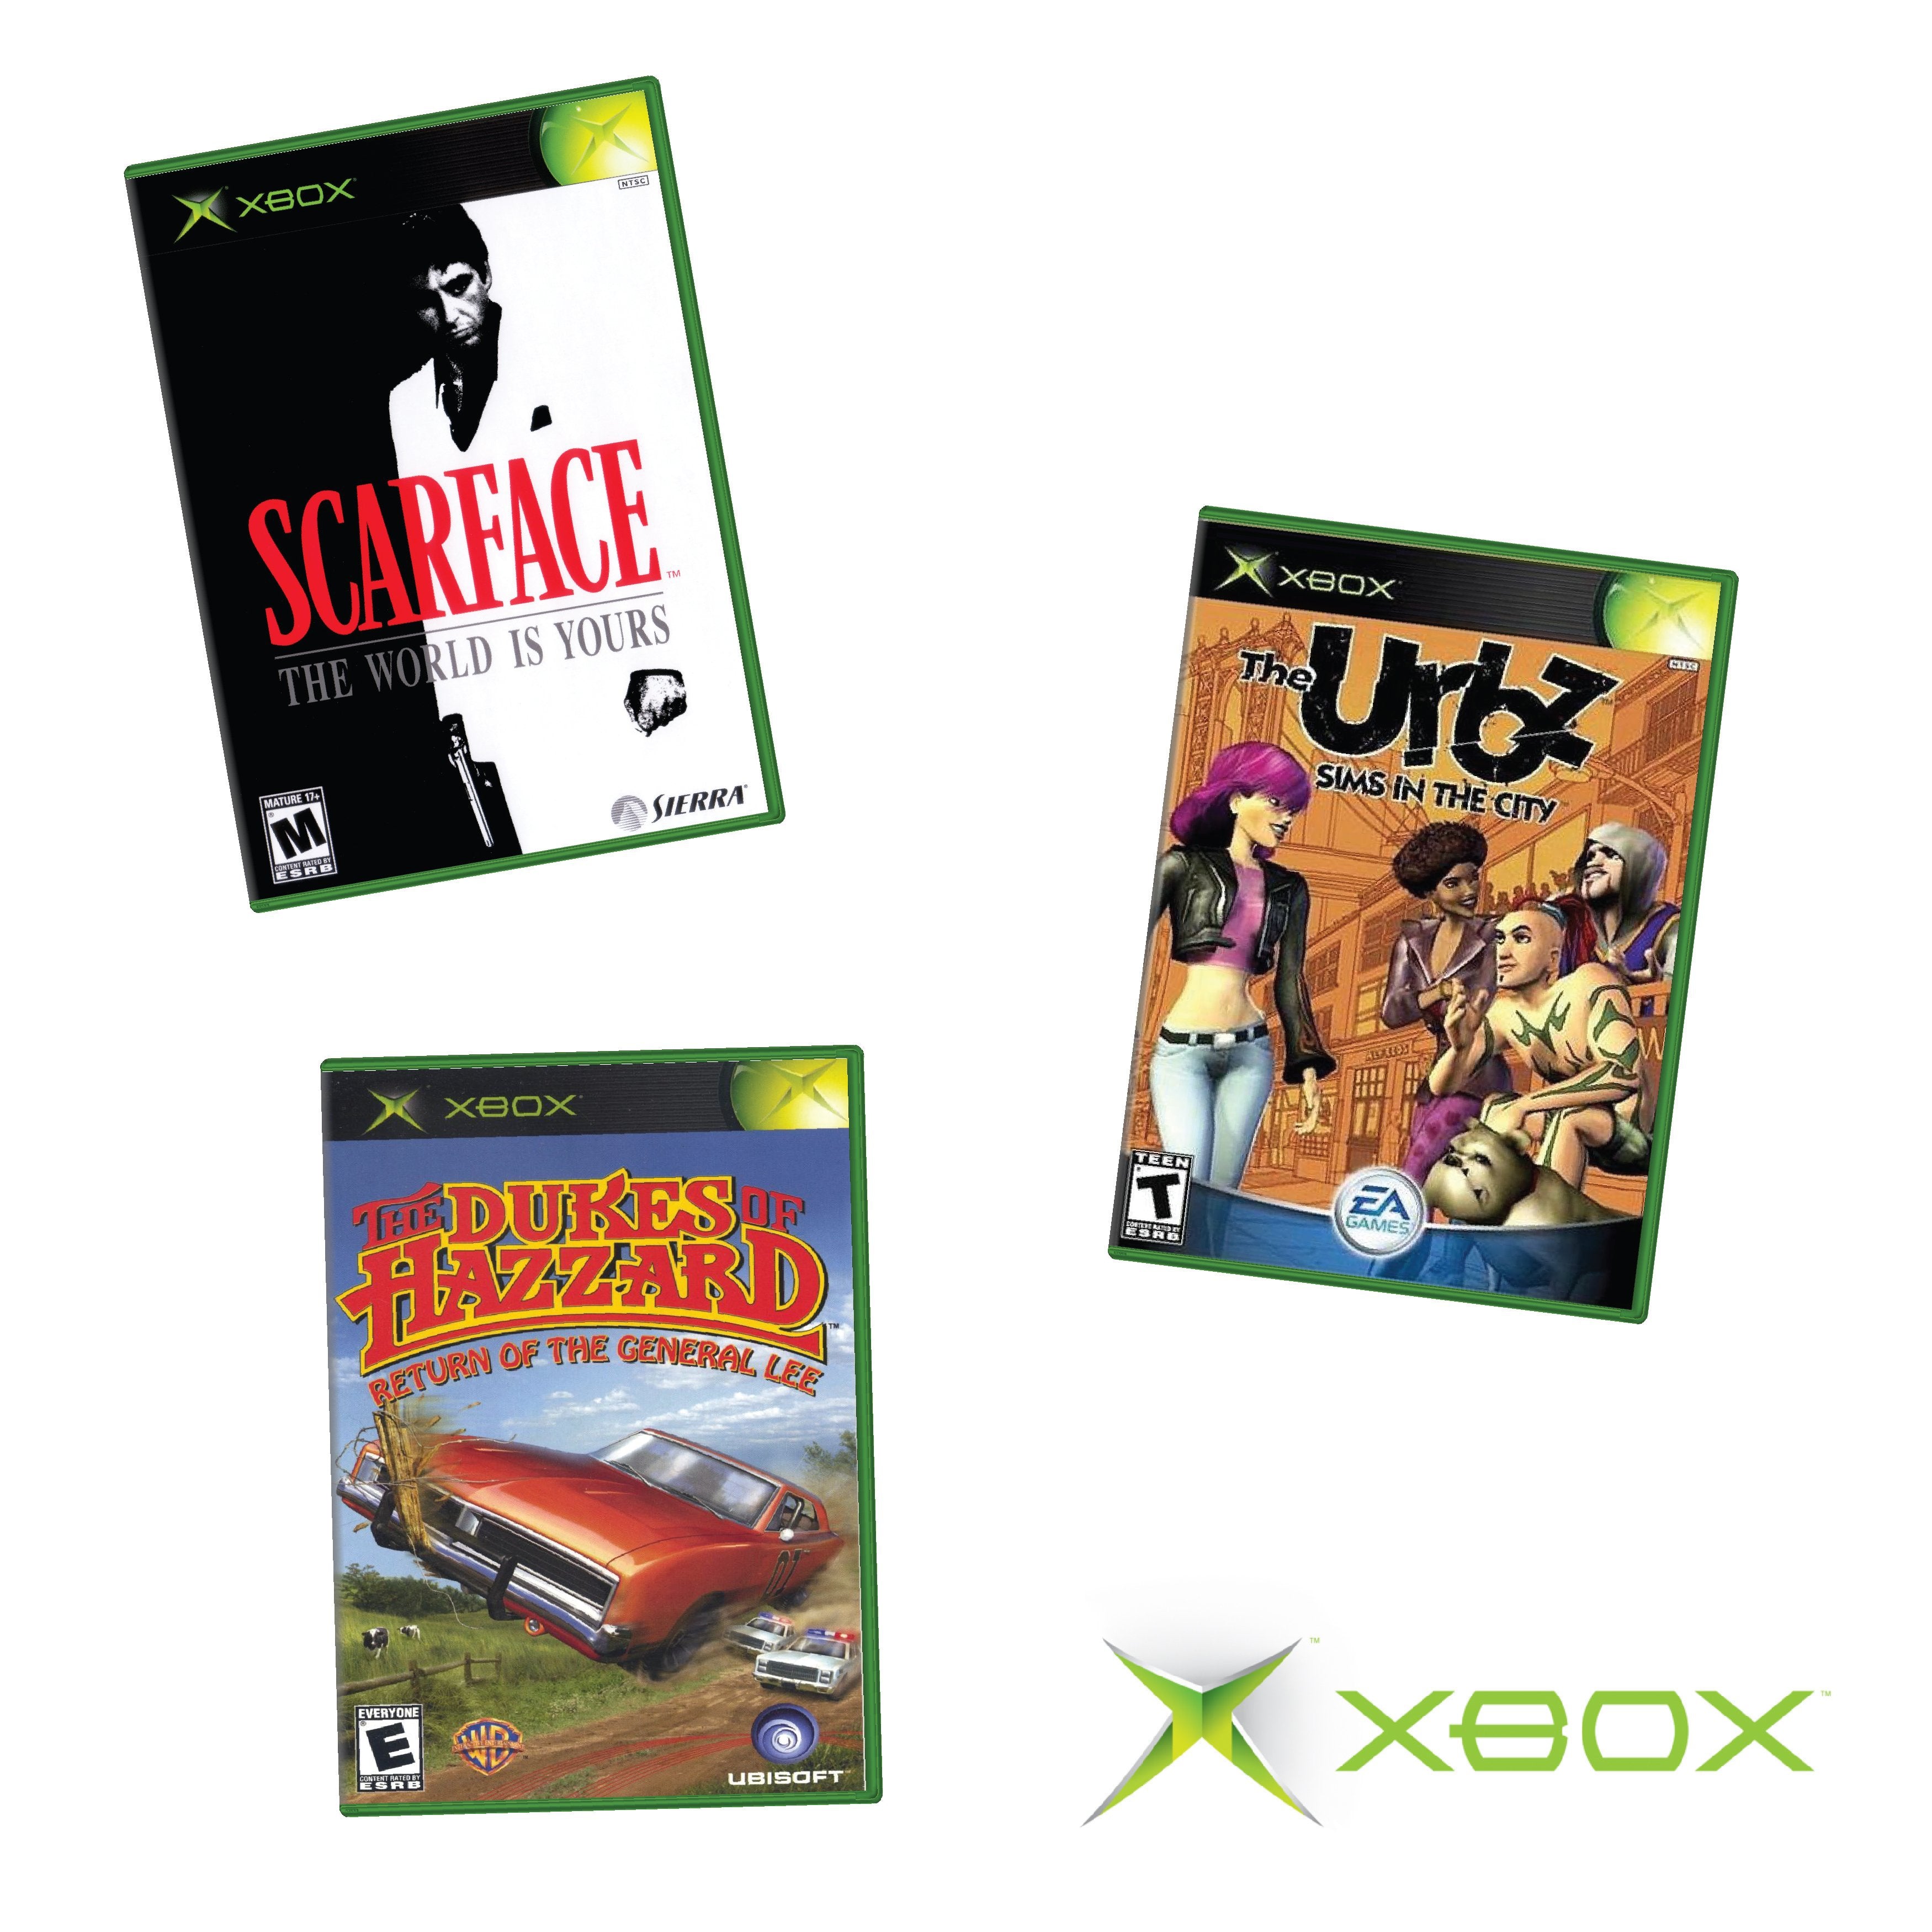 Shop Microsoft Original Xbox Video Games